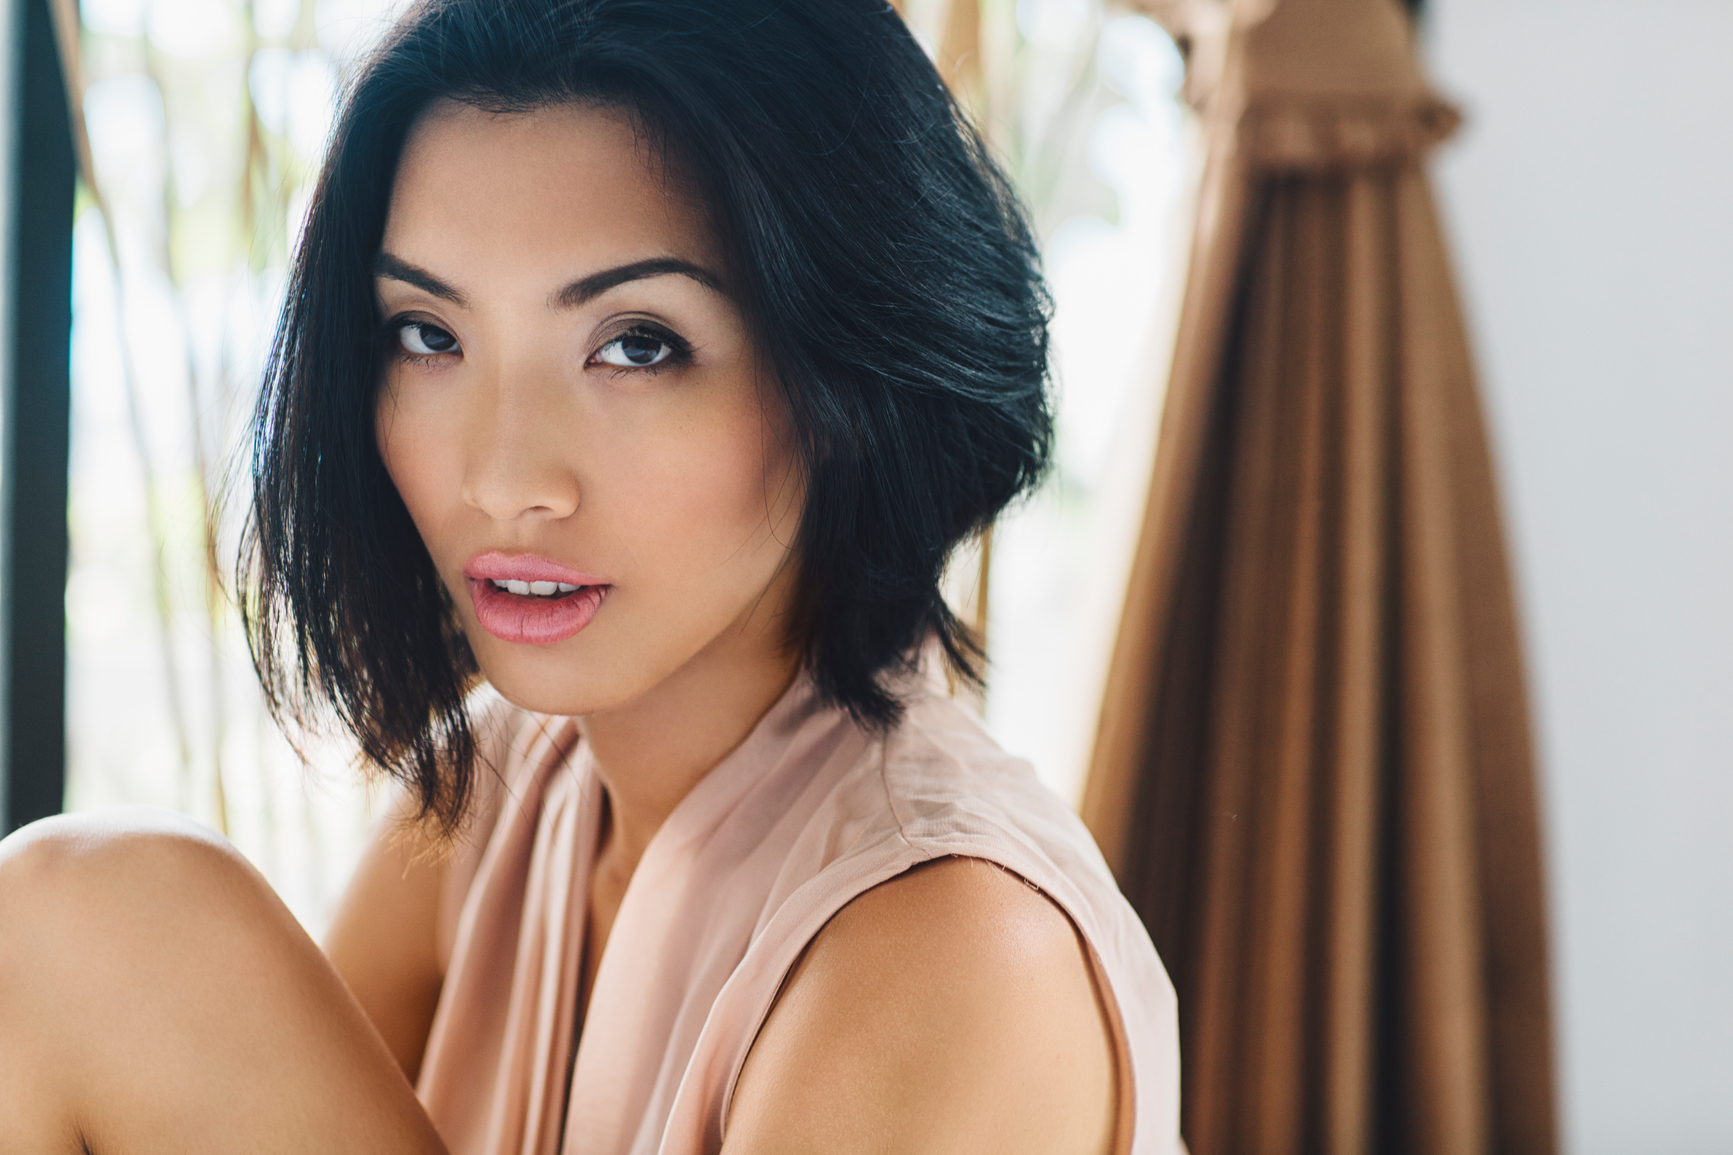 Portrait of a beautiful Asian woman.